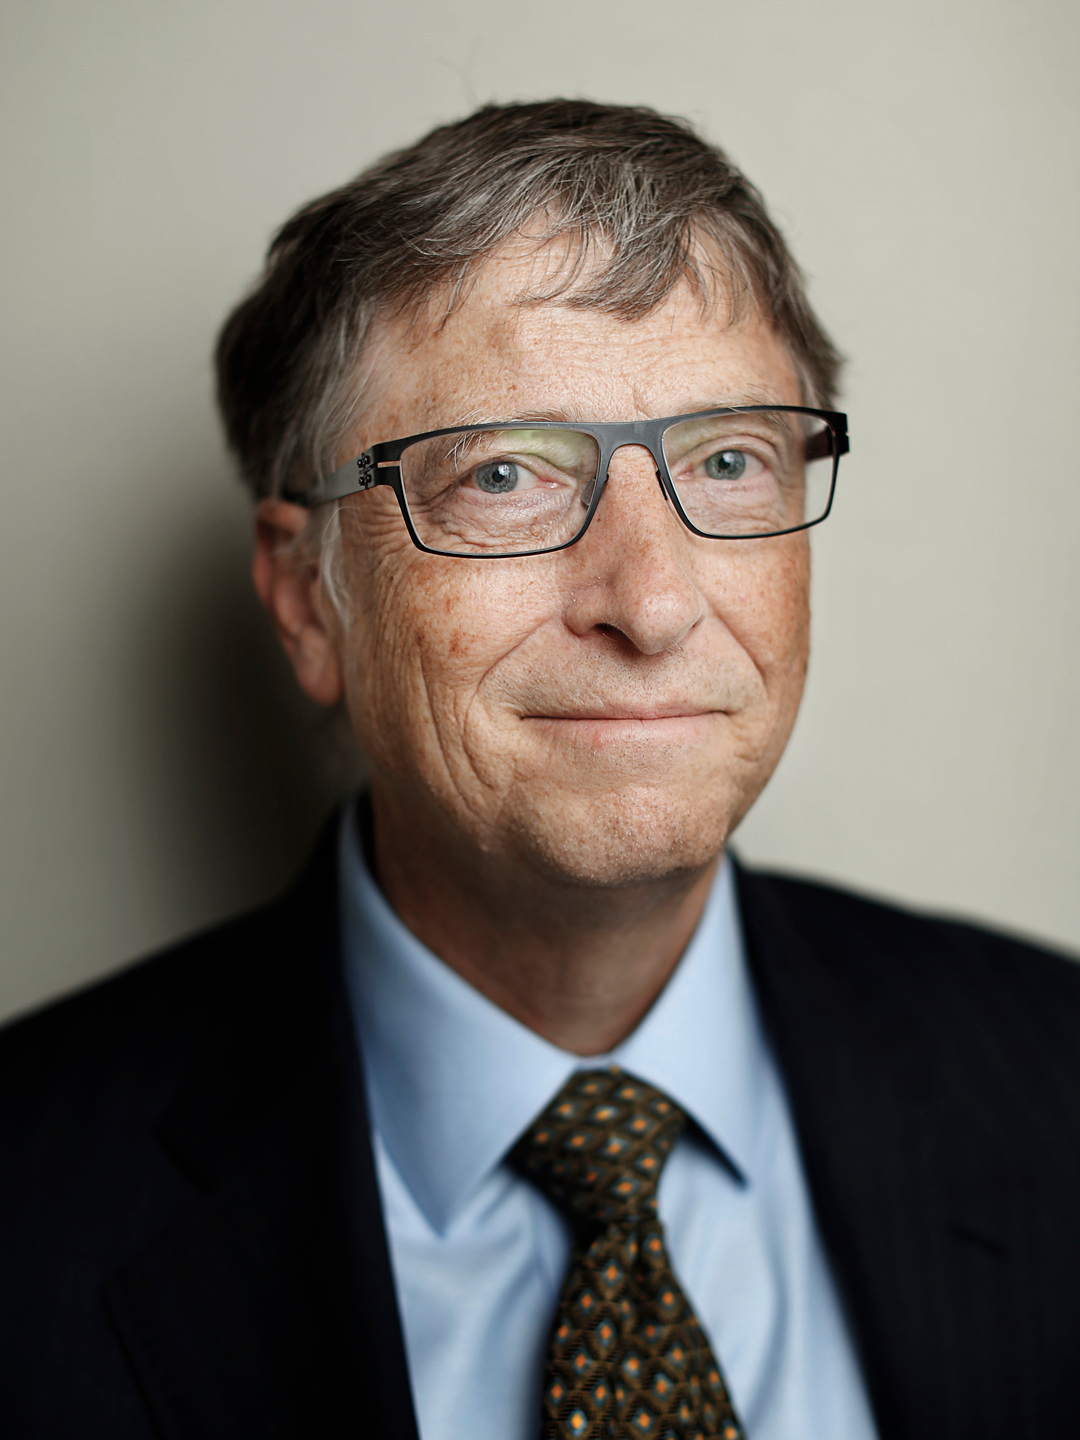 Bill Gates education